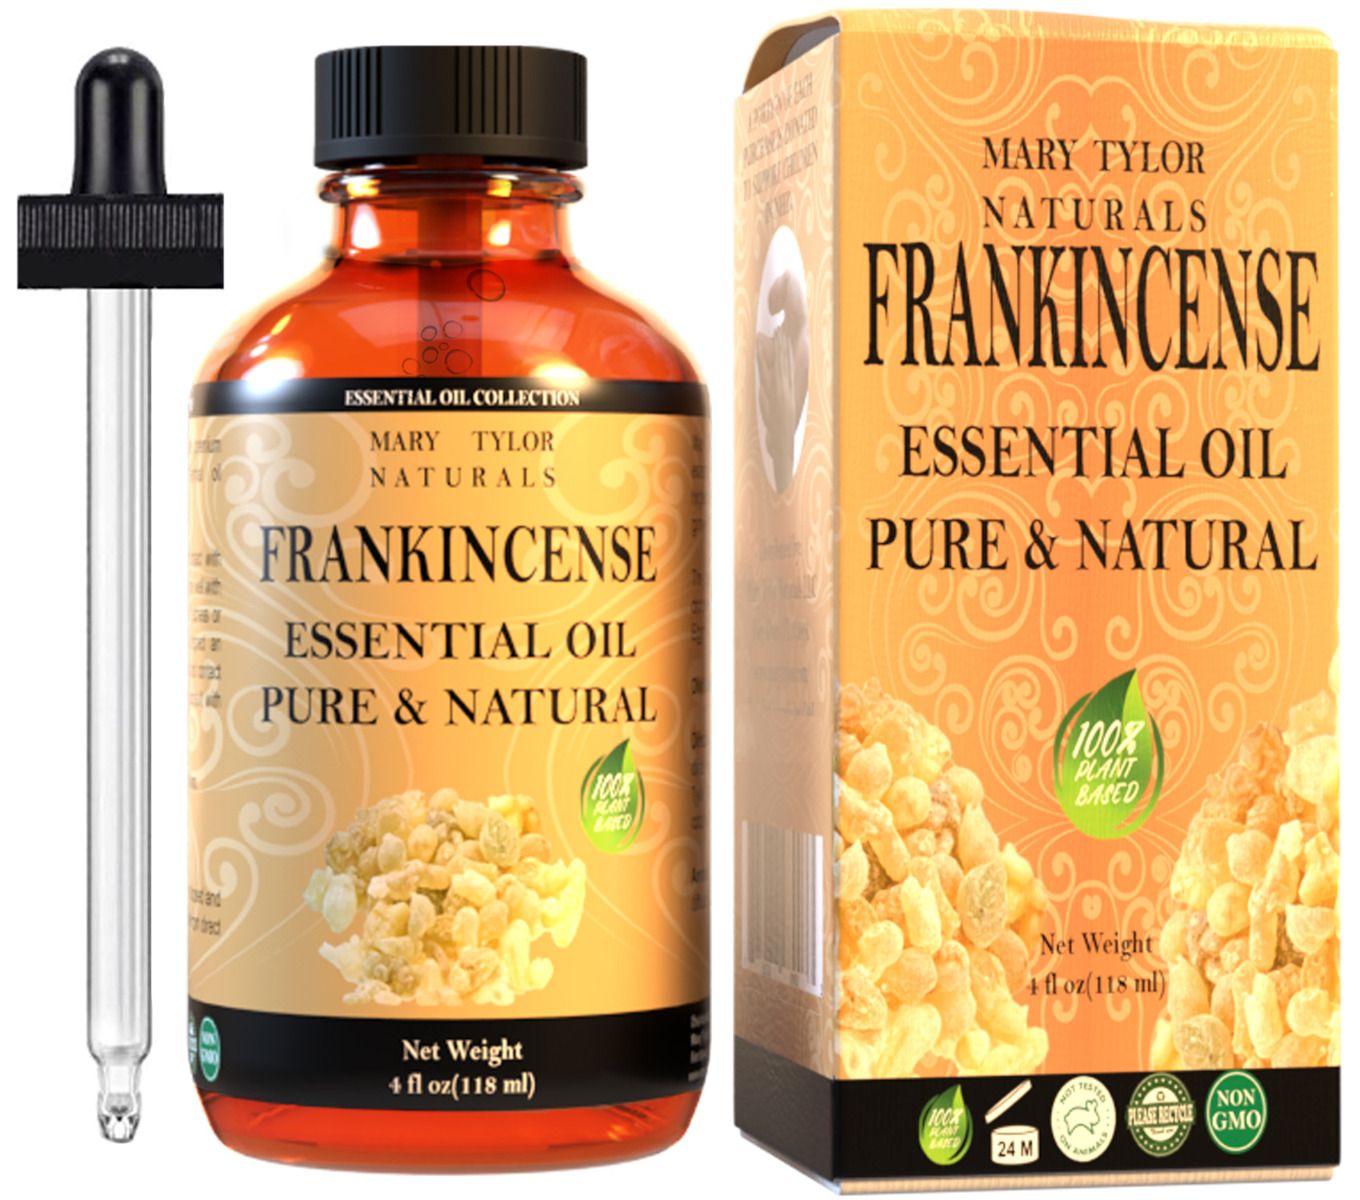 Organic Cinnamon Essential Oil, 4 oz